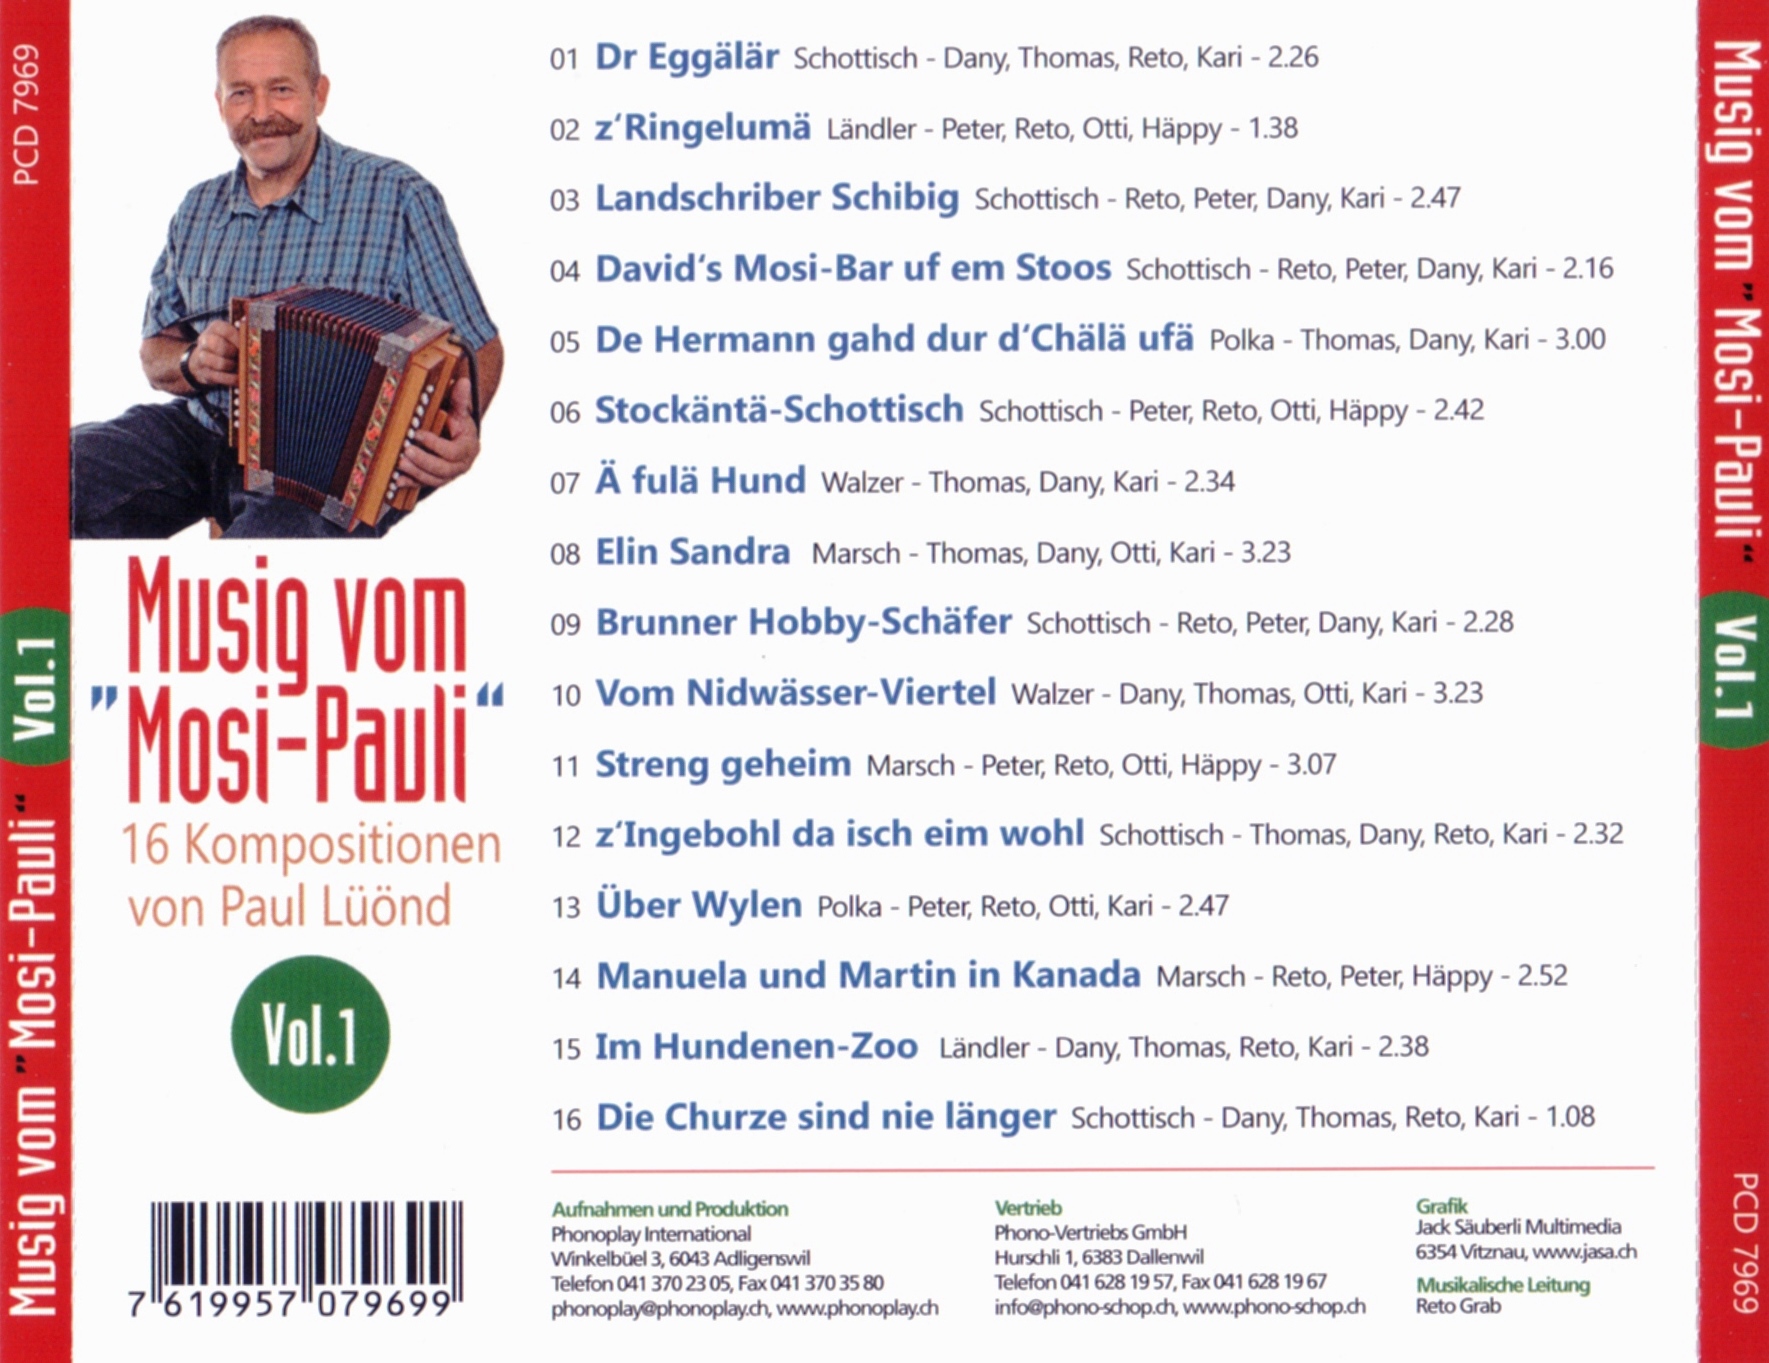 Mosi-Pauli CD 1